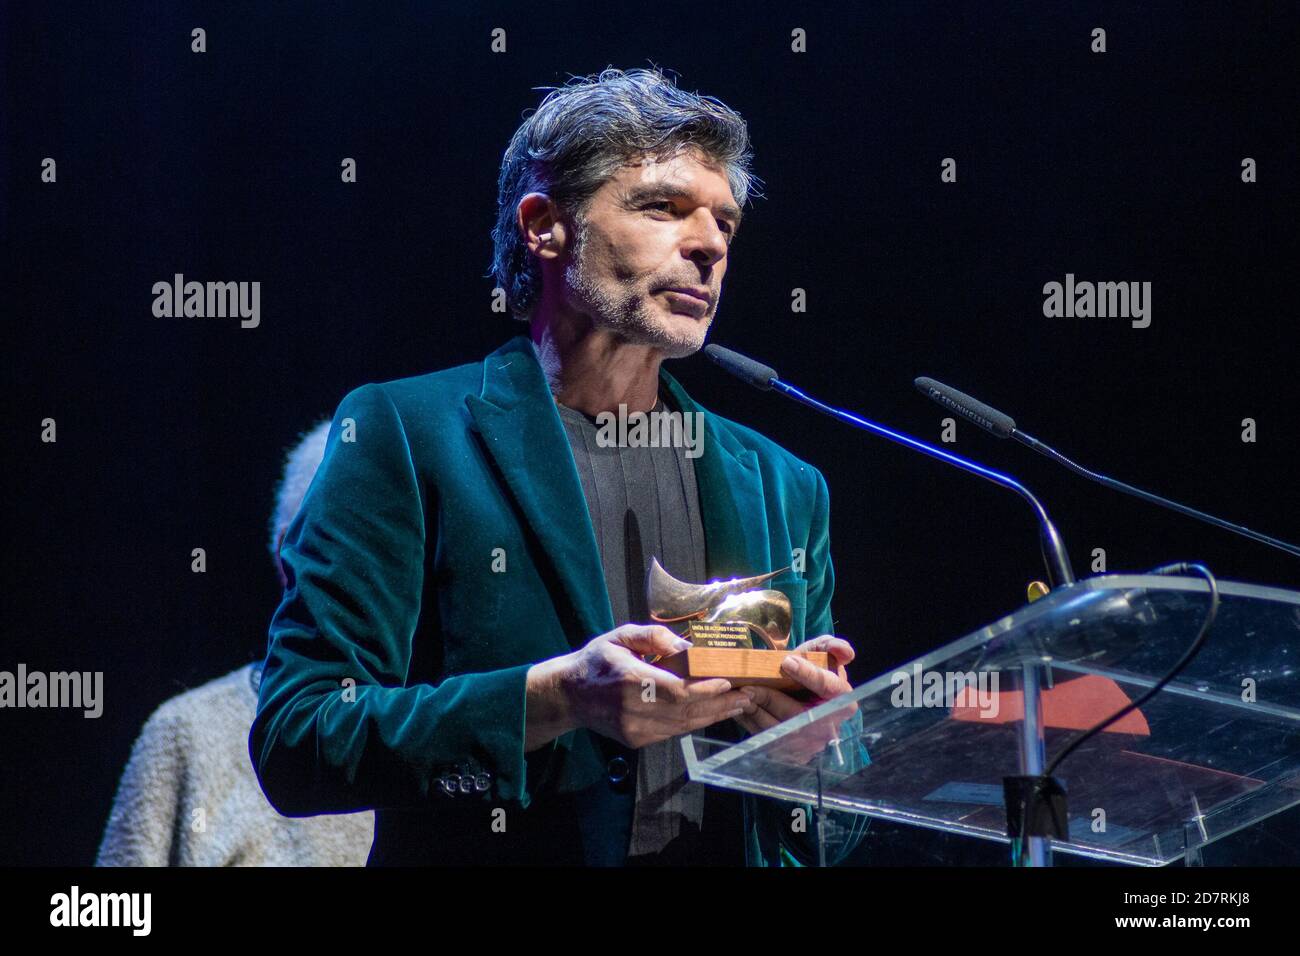 Nacho Guerreros receives his award from 'Union de Actores' Awards 2020 at Teatro Circo Price in Madrid, Spain.March 09, 2020. (Oscar Gil / Alfa Images Stock Photo